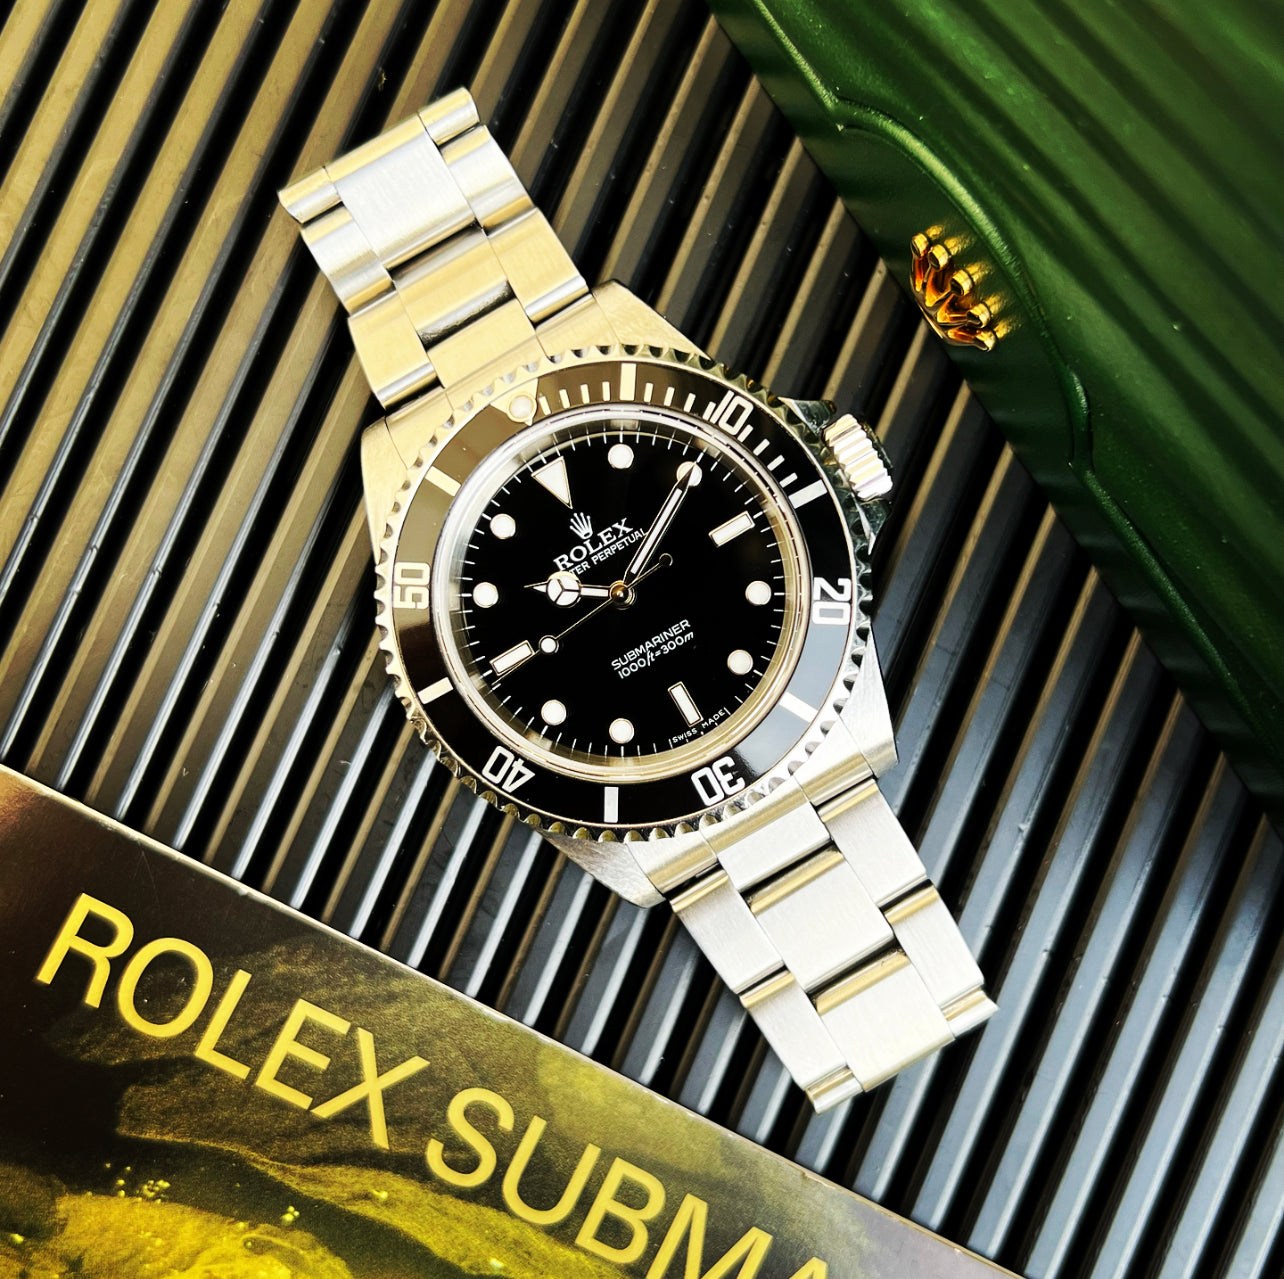 Rolex Submariner no-date 14060M